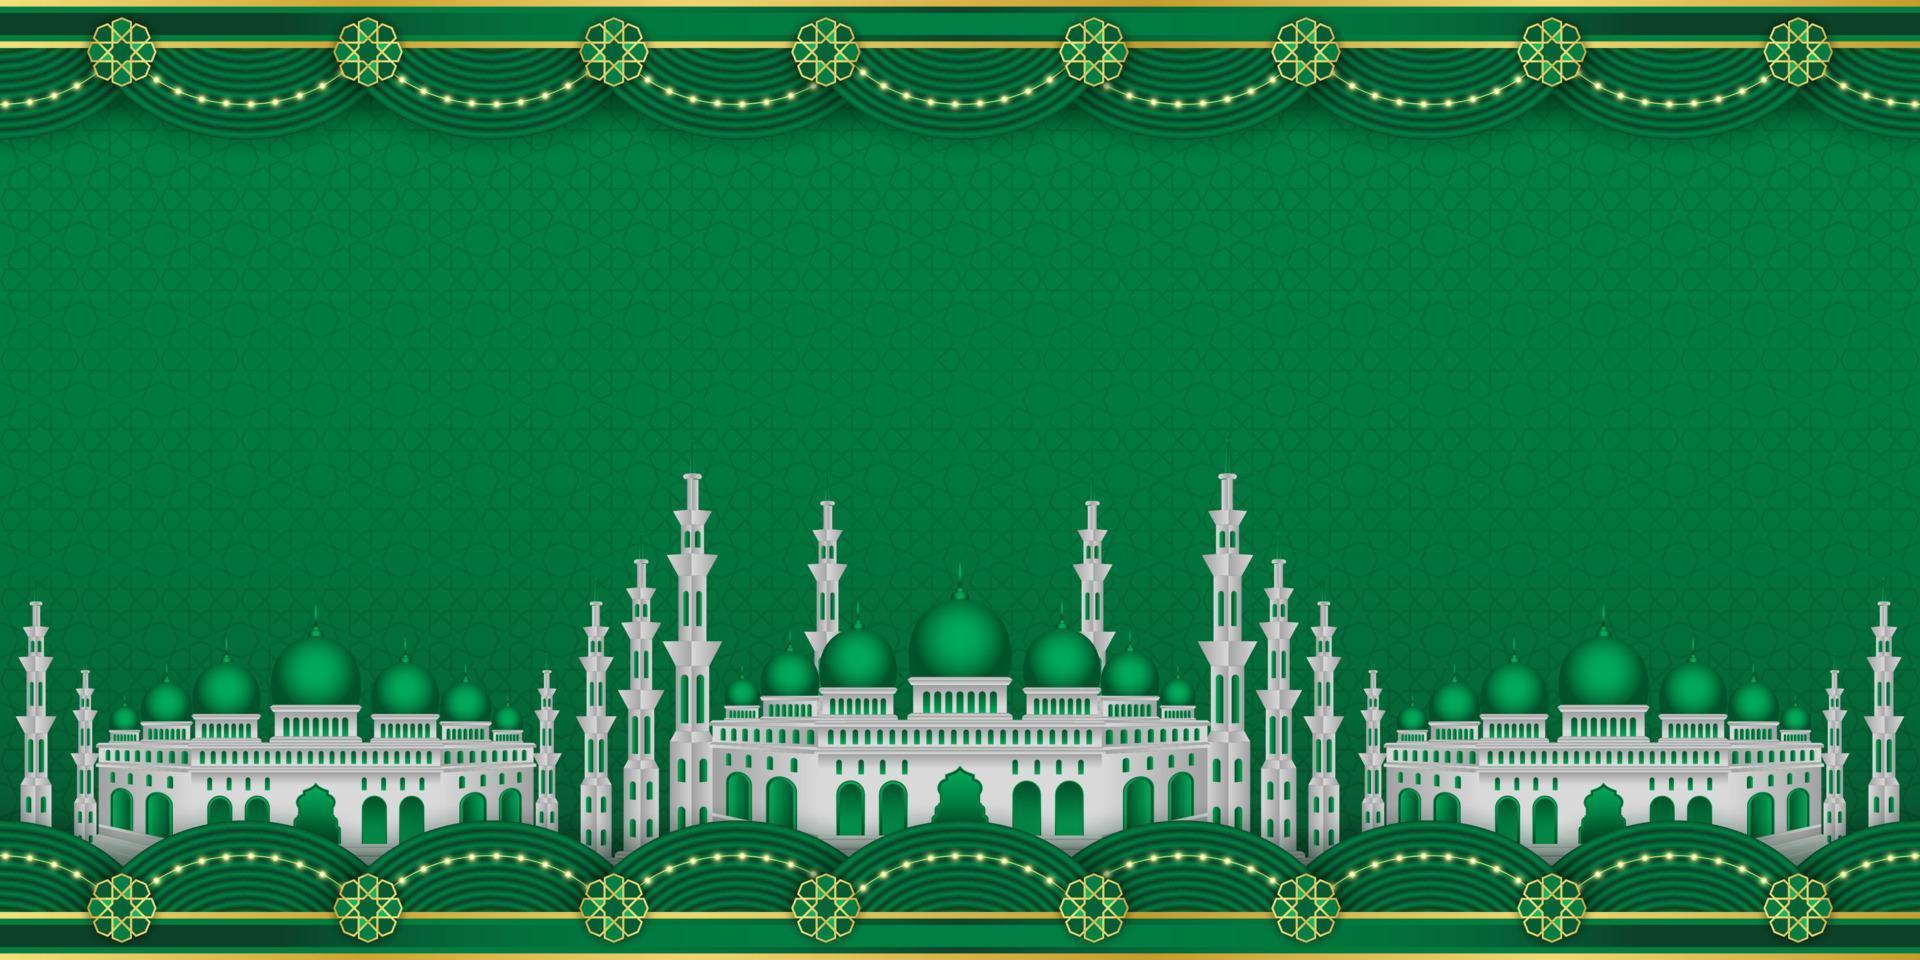 Islamic ornament template for background, banner, poster, cover design, social media feed, stories. Ramadan Kareem and eid mubarak 2023 concept vector